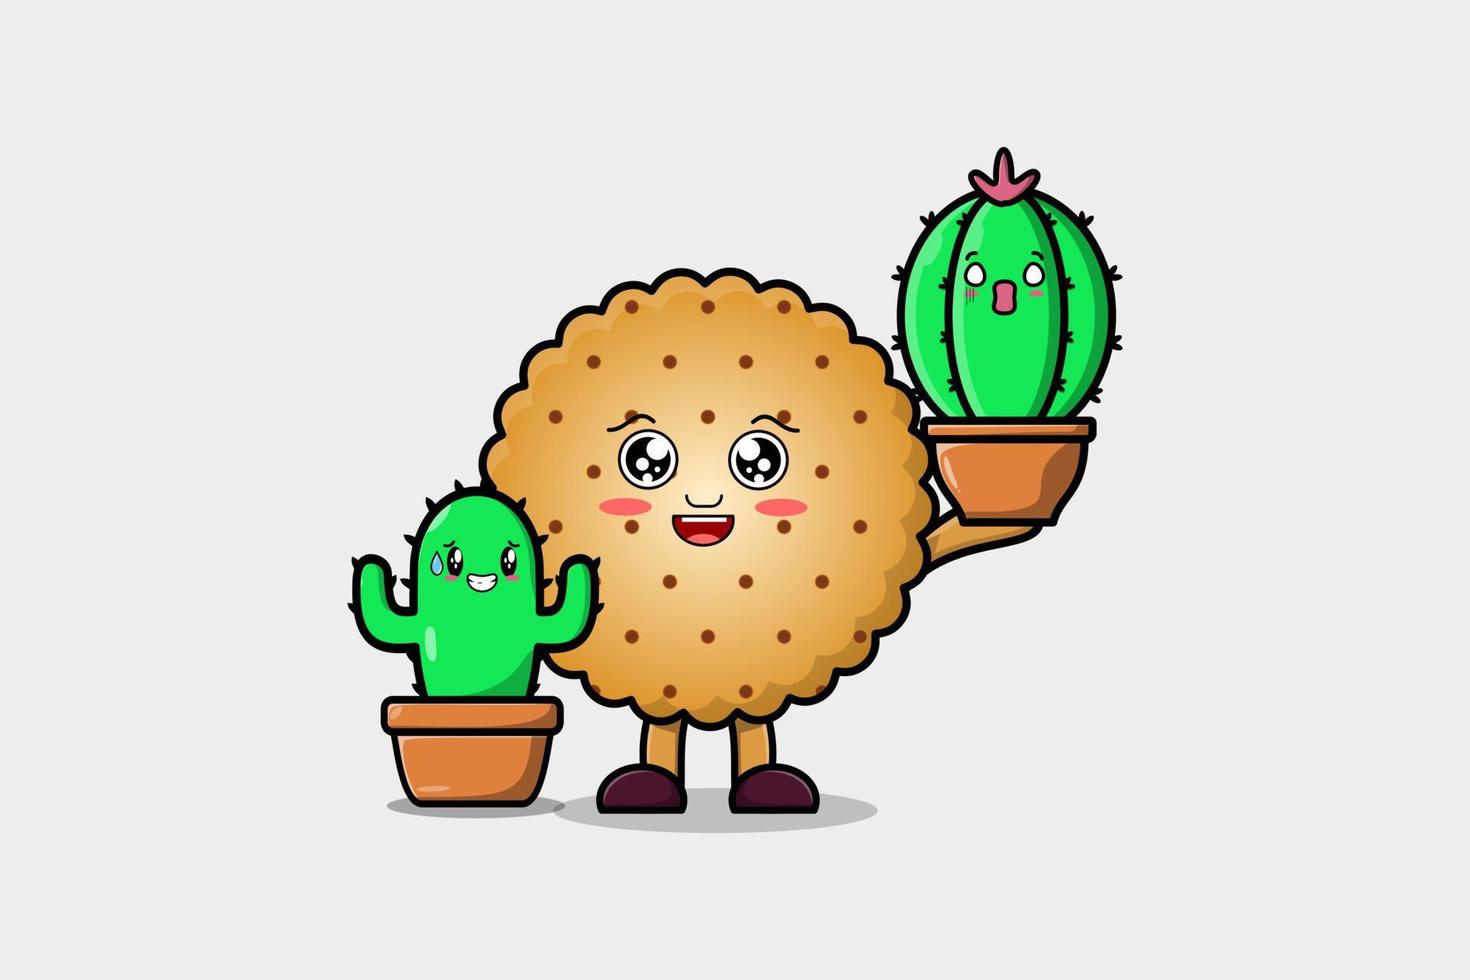 Cute cartoon Cookies holding cactus plant in pot vector